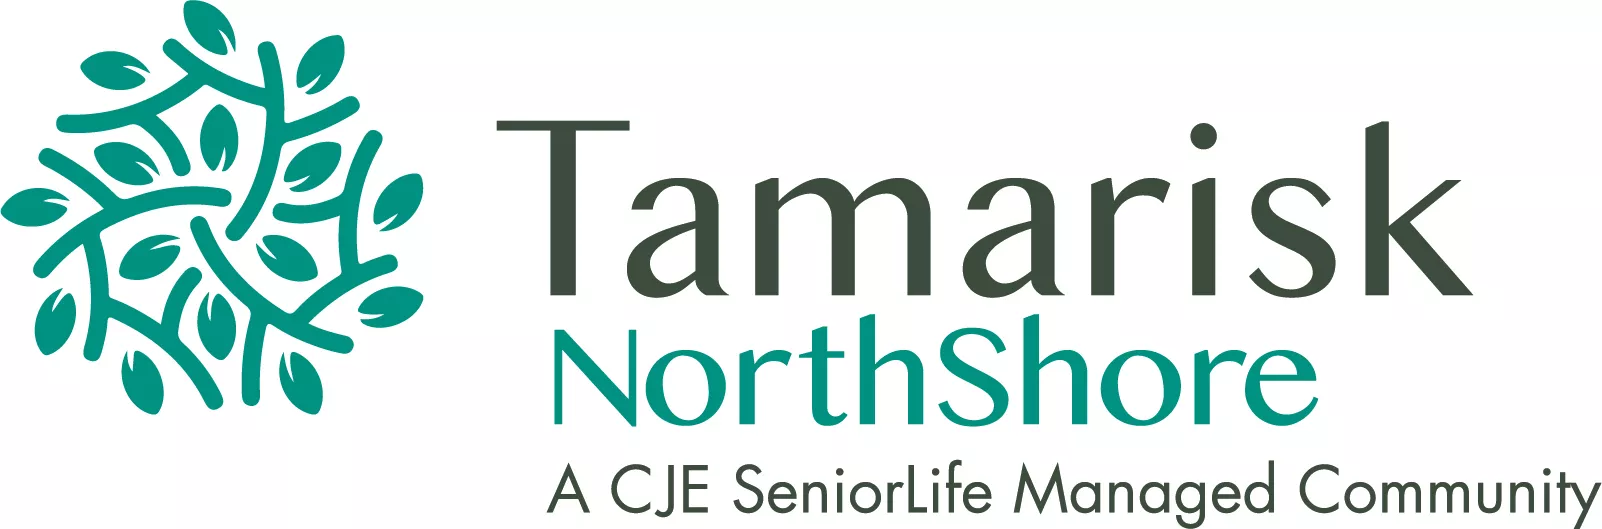 Tamarisk Northshore logo